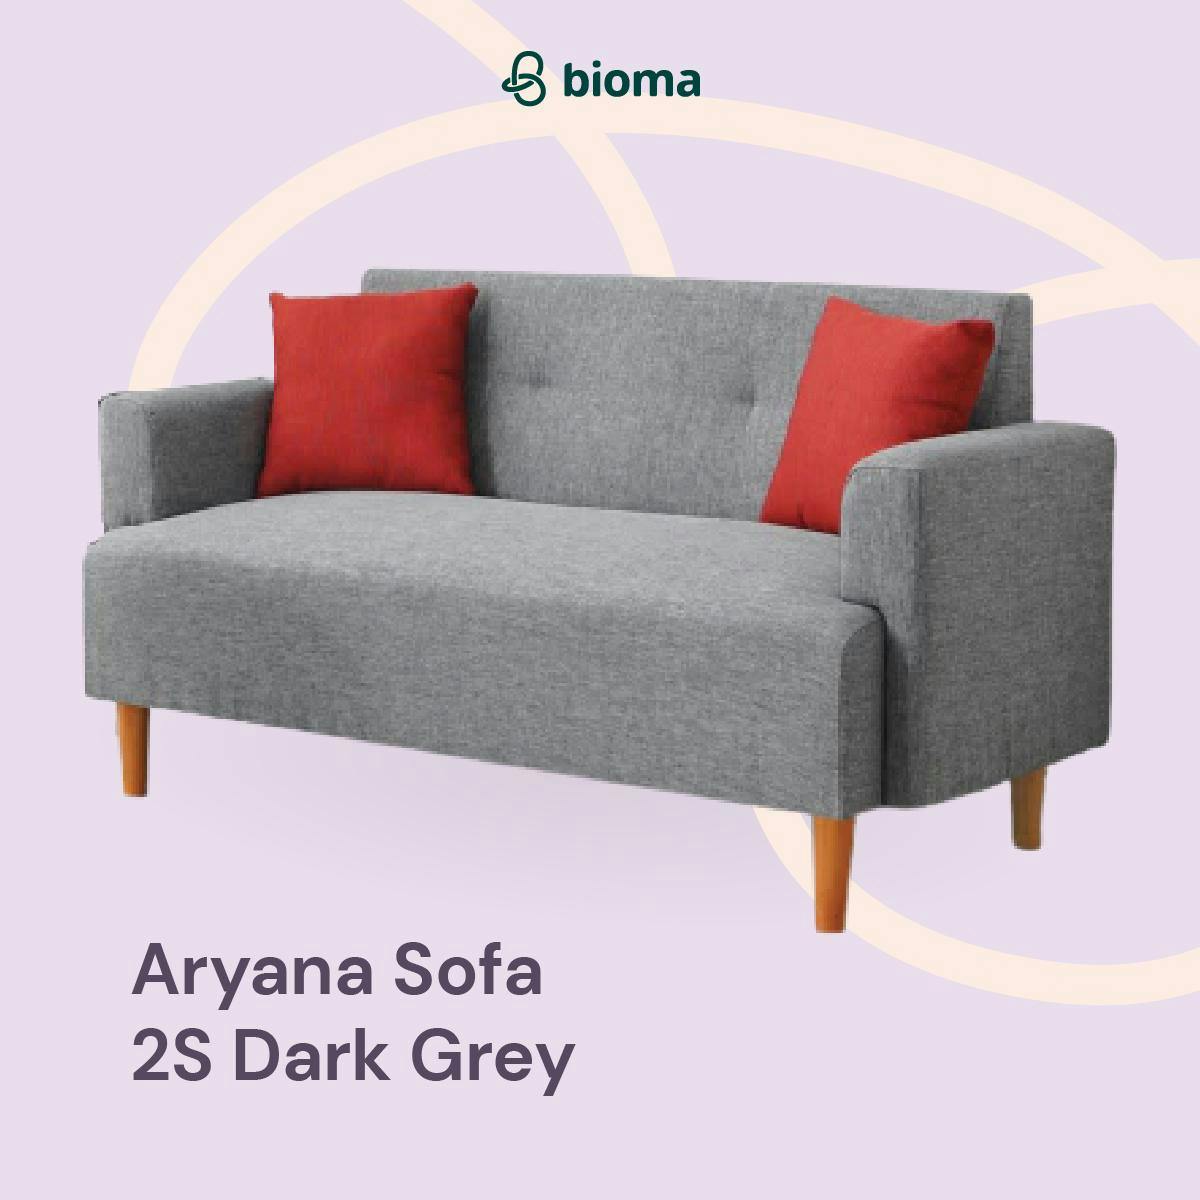 Aryana Sofa